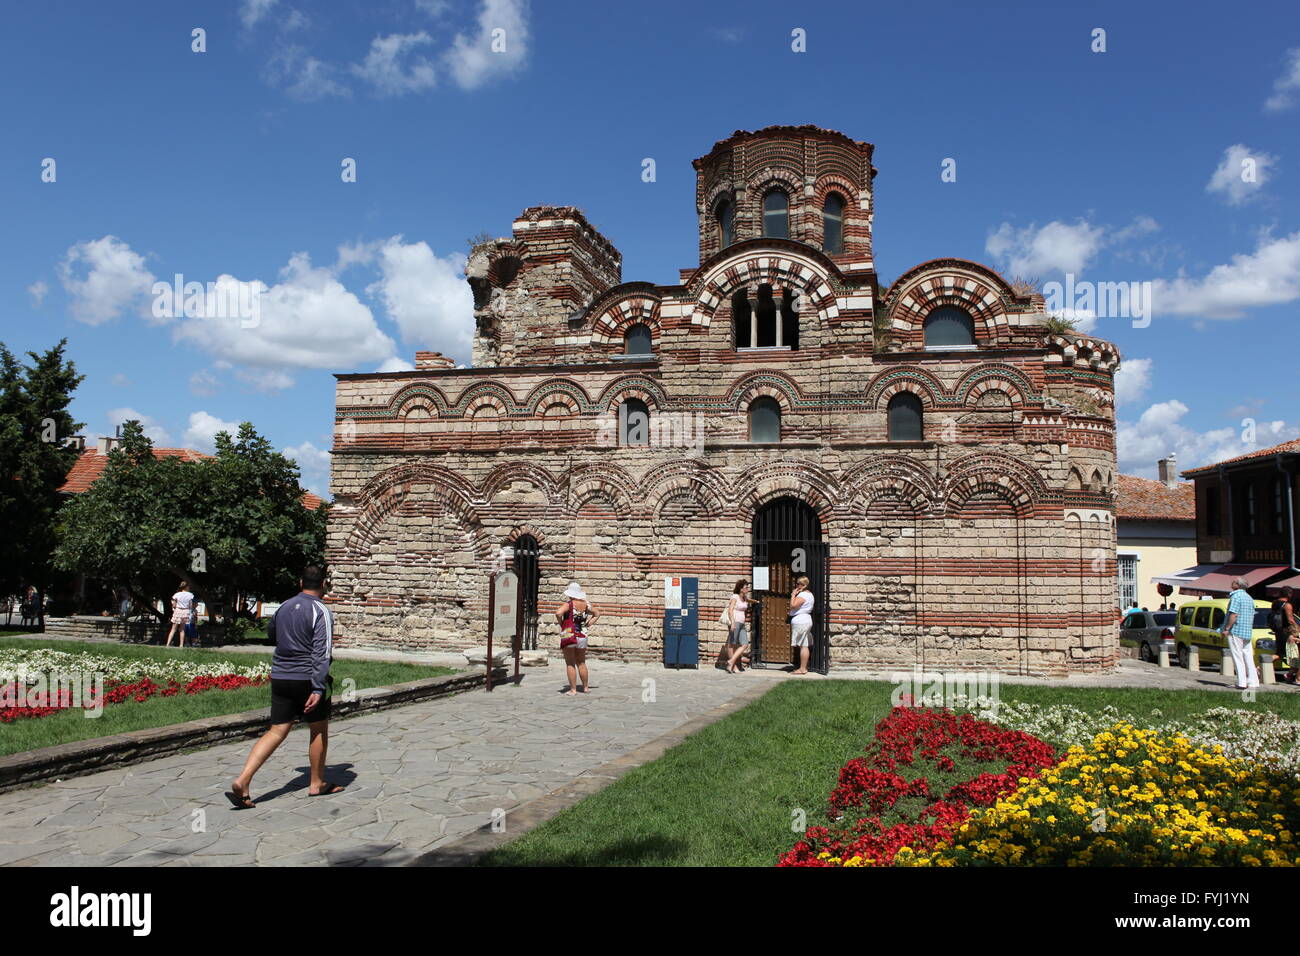 NESEBAR, BULGARIA - AUGUST 29: People visit Old Town on August 29, 2014 in Nesebar, Bulgaria. Nesebar in 1956 was declared as mu Stock Photo